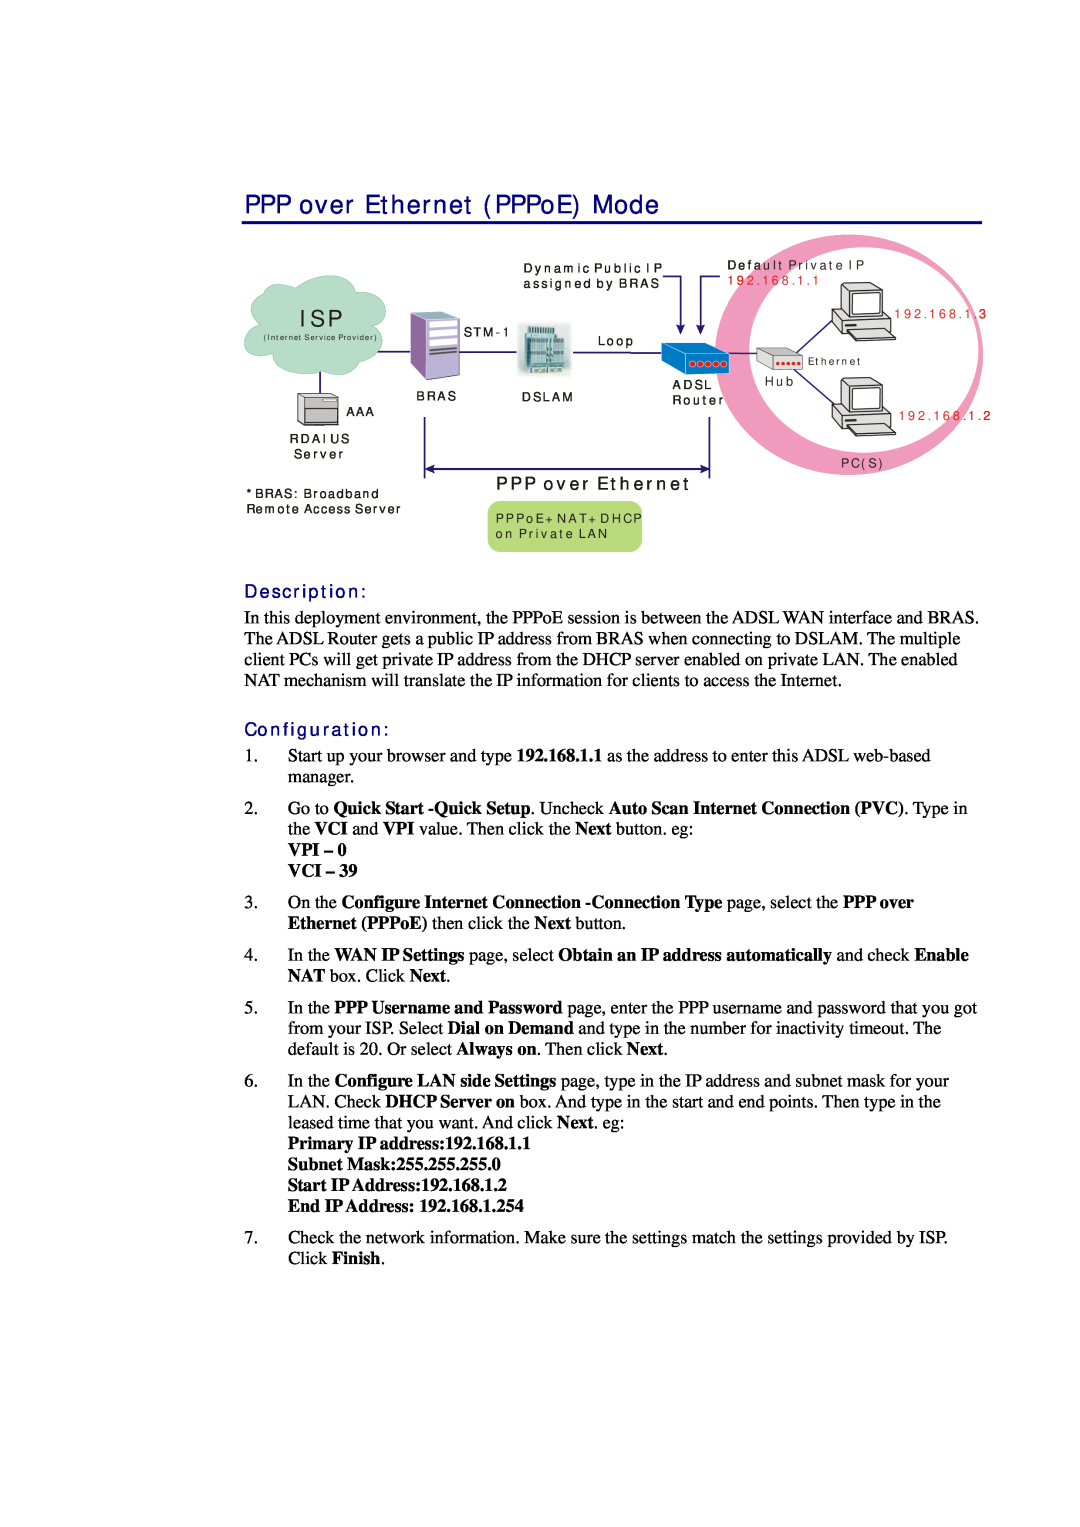 Siemens CL-010-I manual PPP over Ethernet PPPoE Mode, Description, Configuration, VPI - 0 VCI 